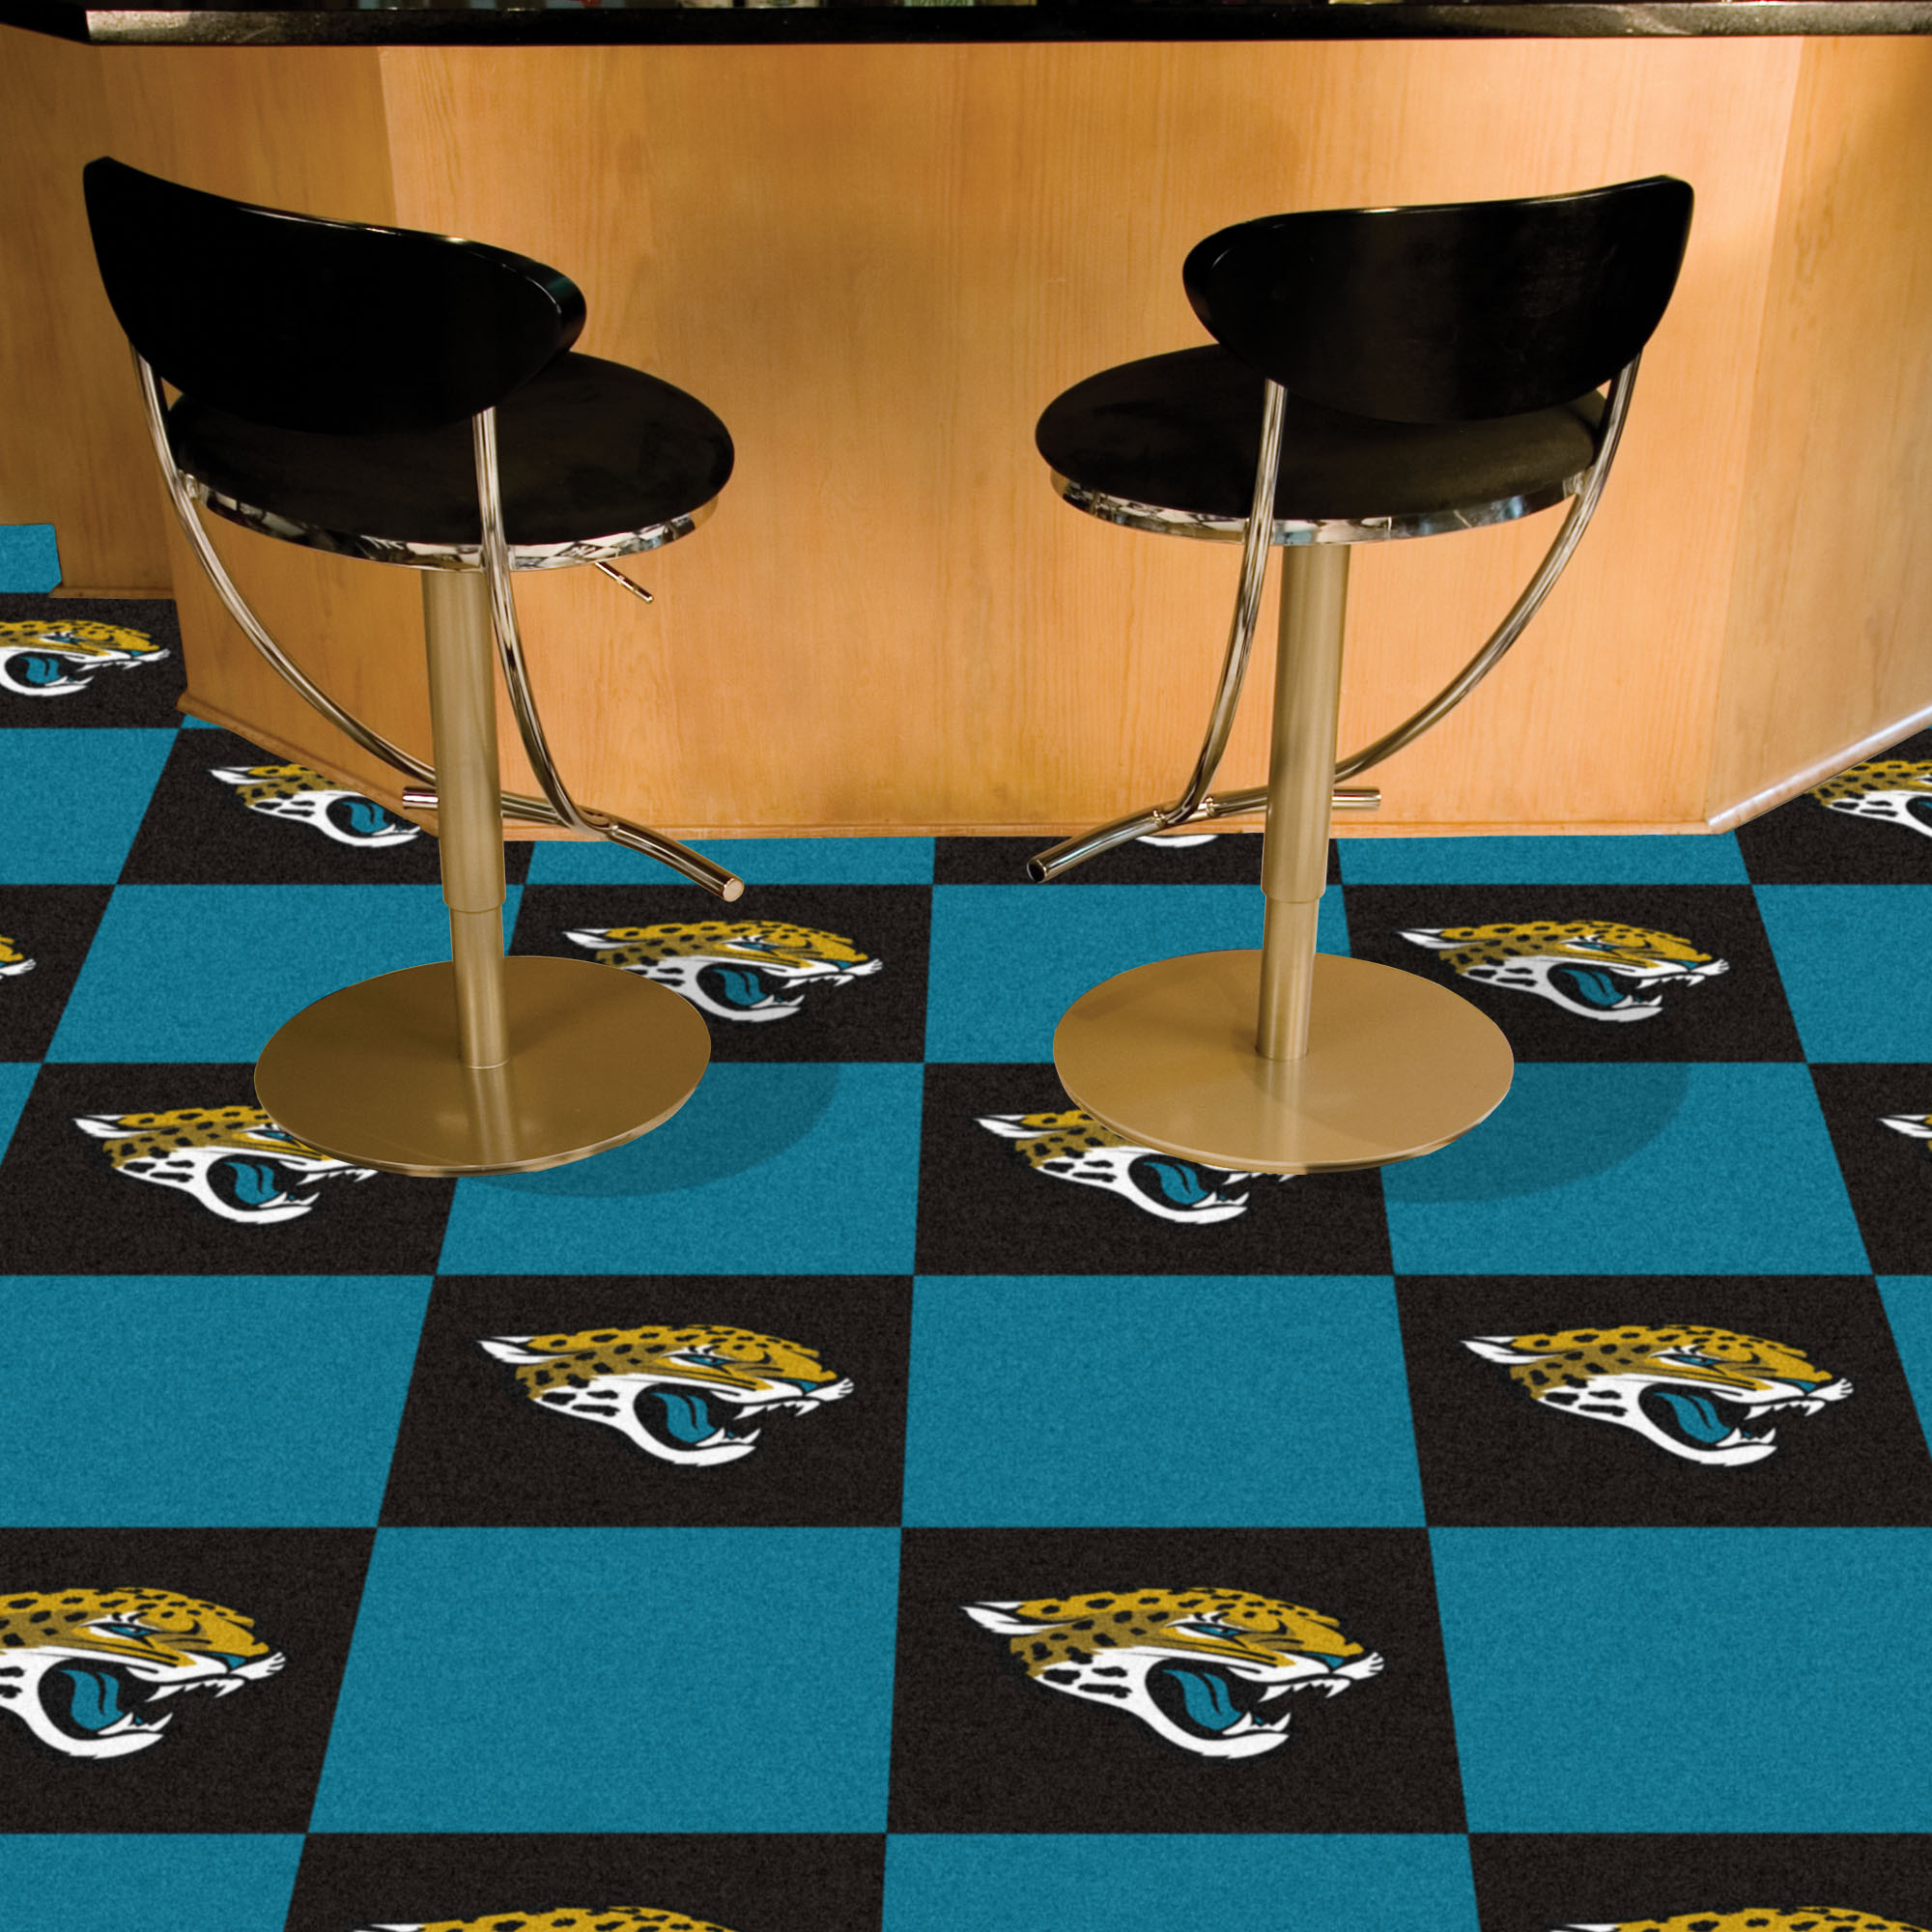 Jaguars Team Carpet Tiles - 45 sq ft